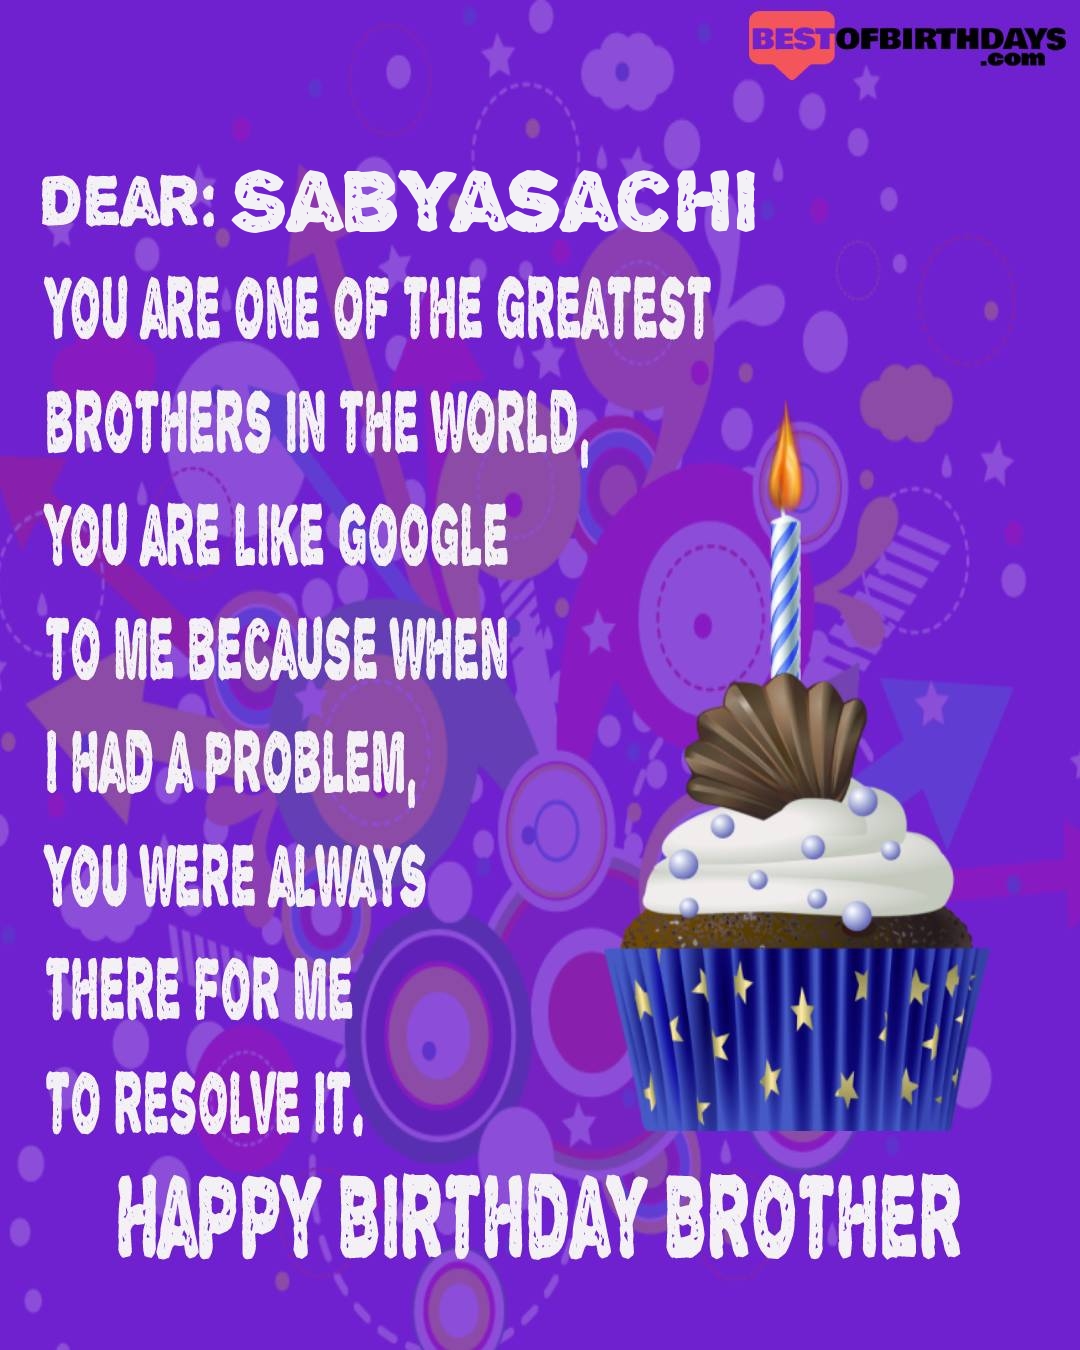 Happy birthday sabyasachi bhai brother bro